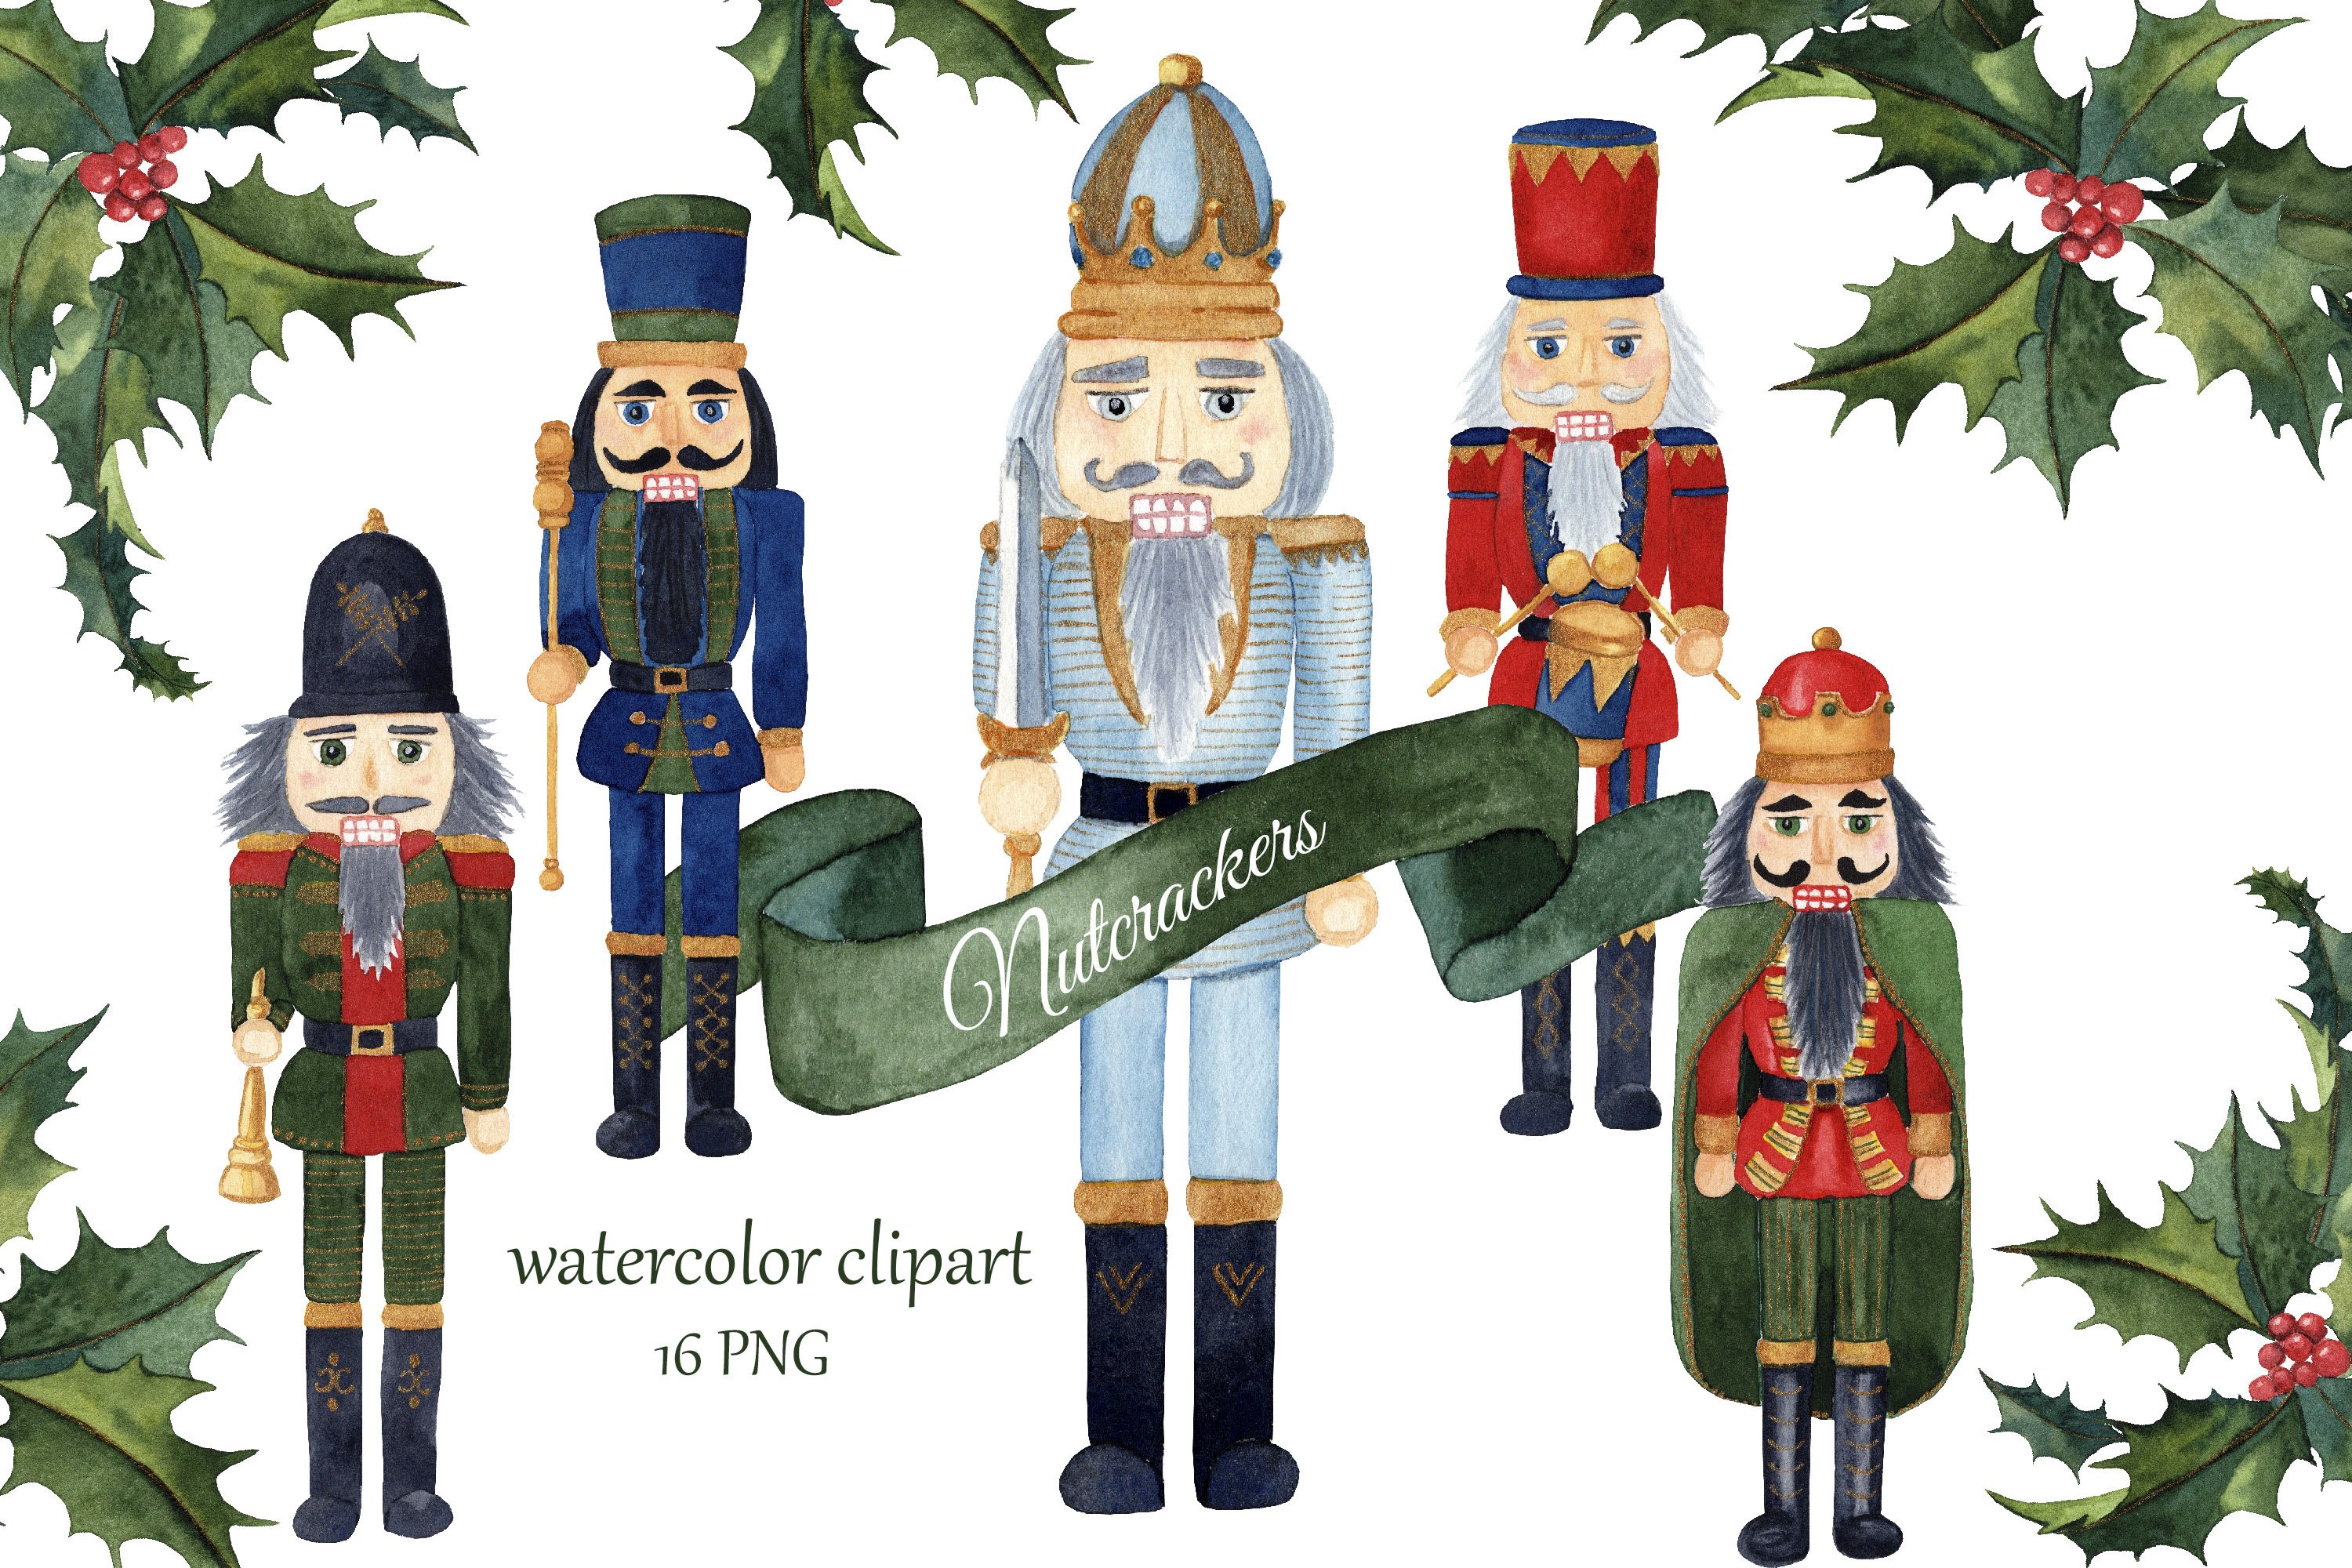 Watercolor Christmas Nutcrackers cover image.